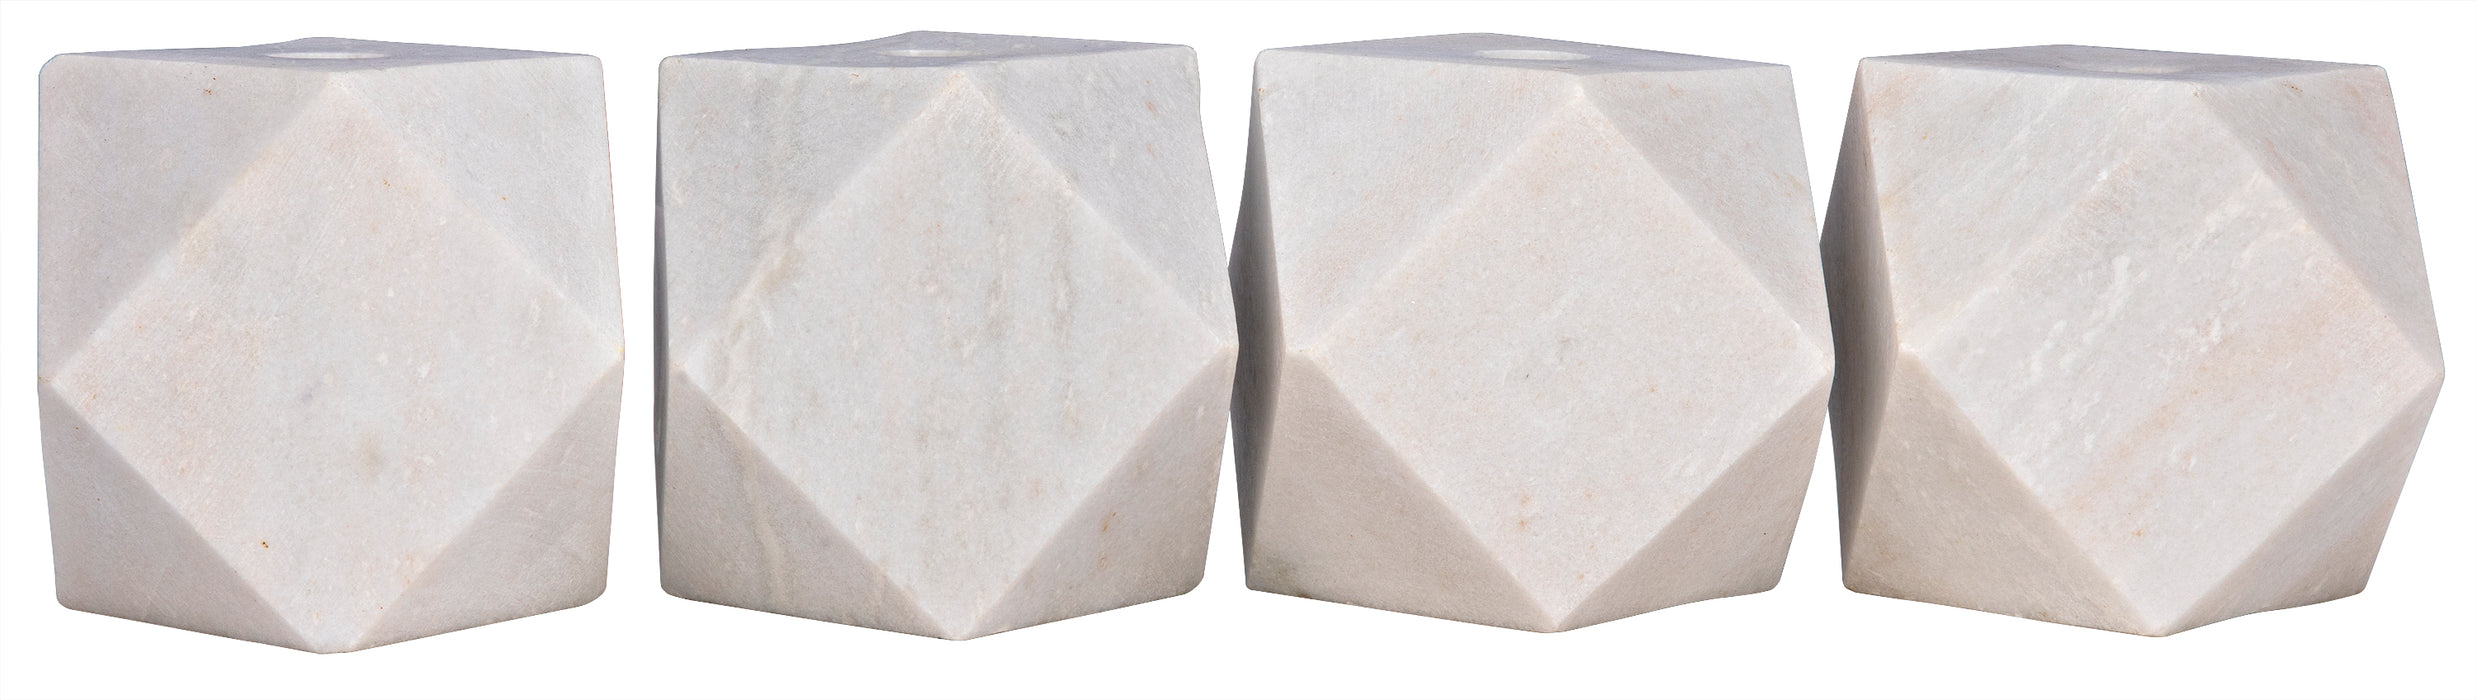 Polyhedron Decorative Candle Holder, Set of 4, White Marble